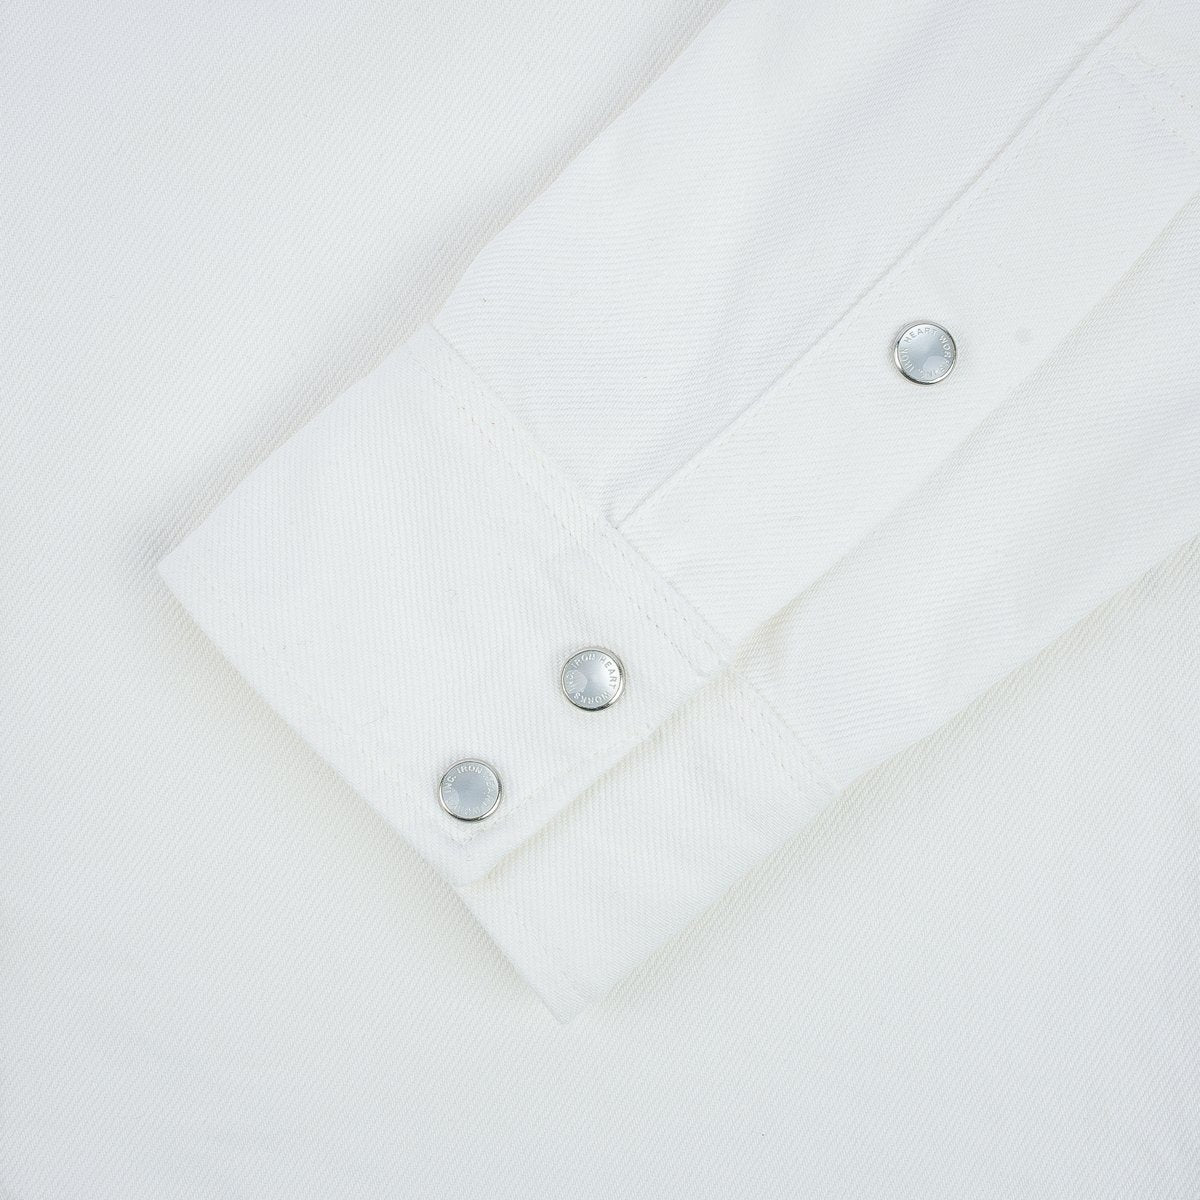 Iron Heart IHSH-384-WHT 13.5oz Cotton Twill Western Shirt - White